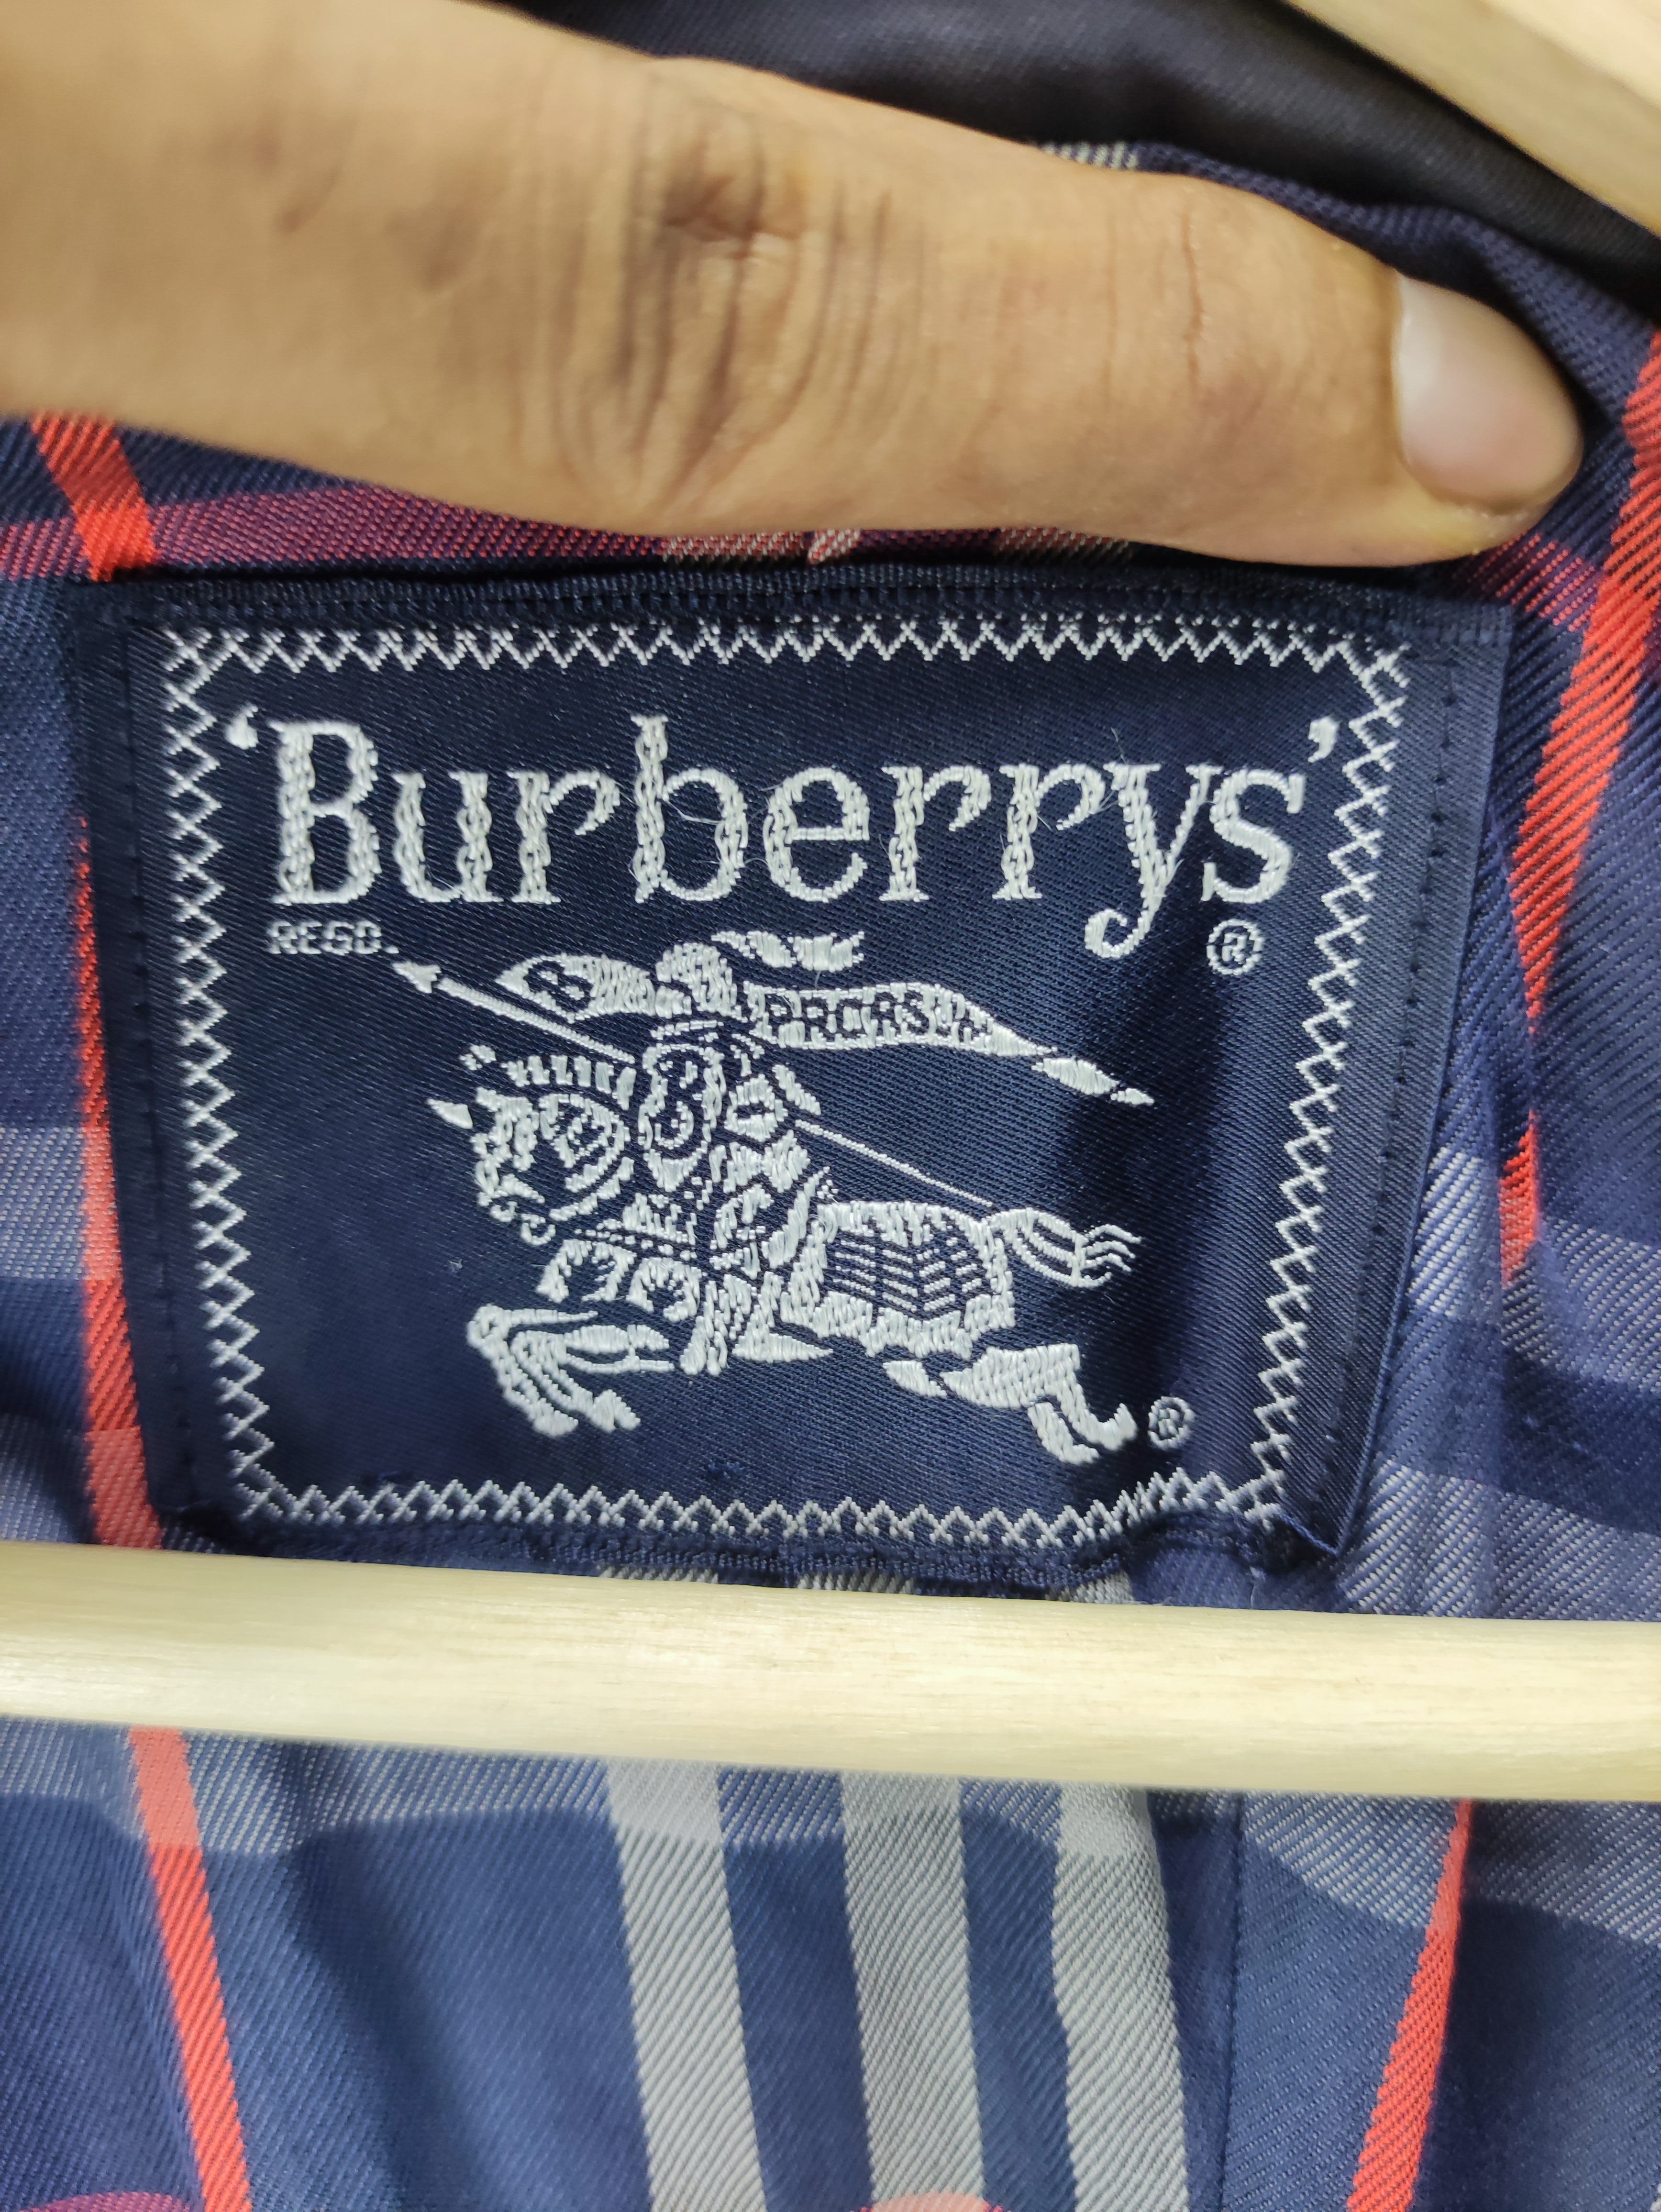 Vintage Burberrys Trench Coat Long Jacket - 4